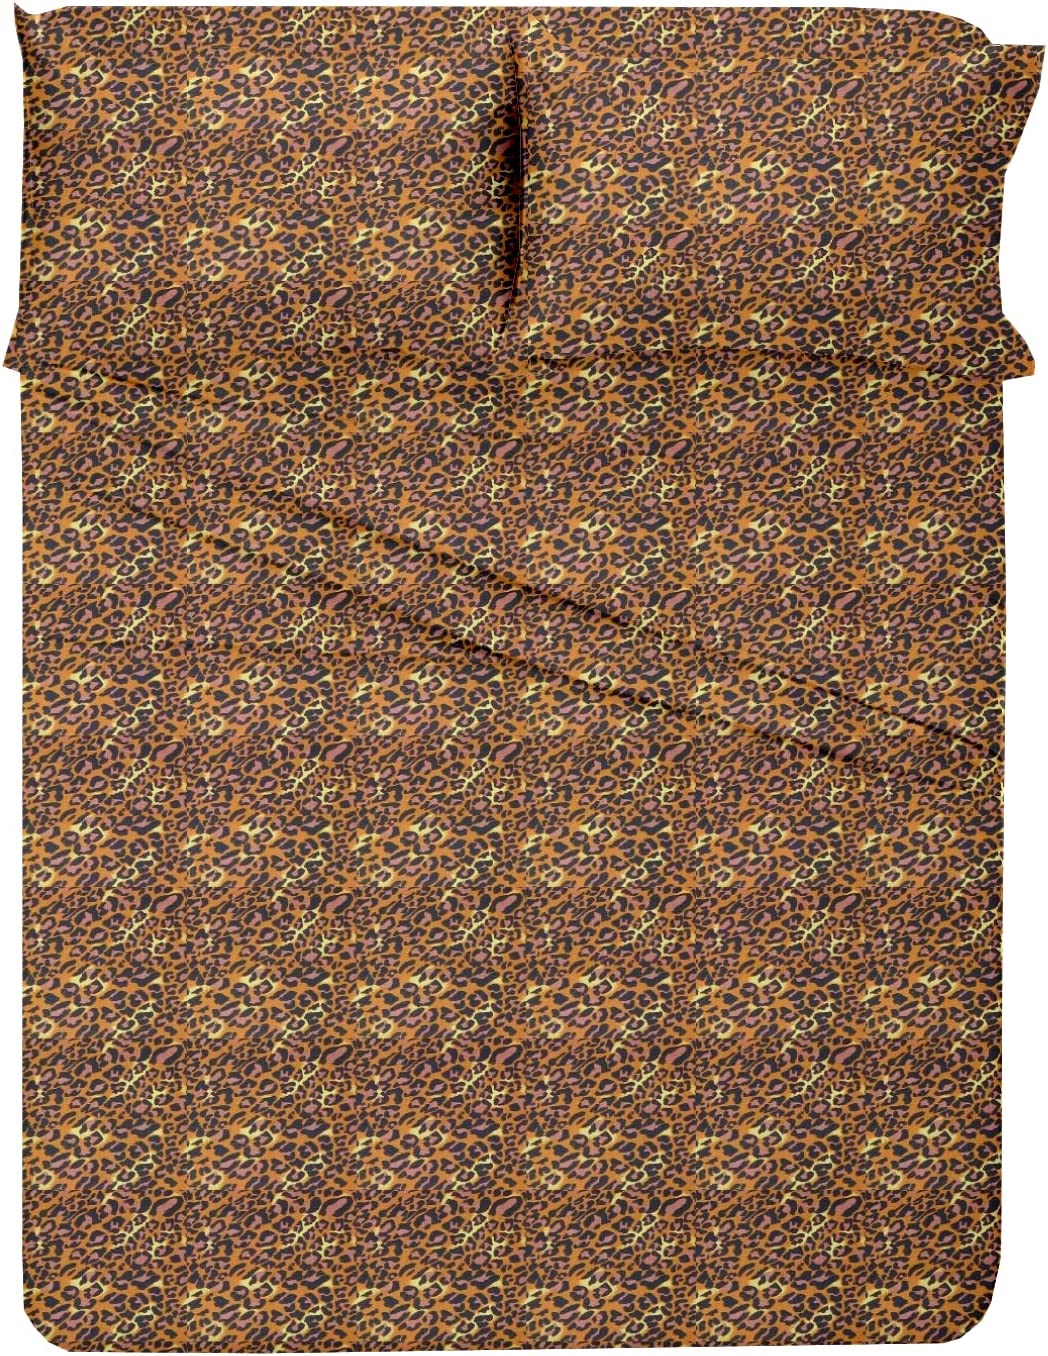 leopard bed skirt cotton